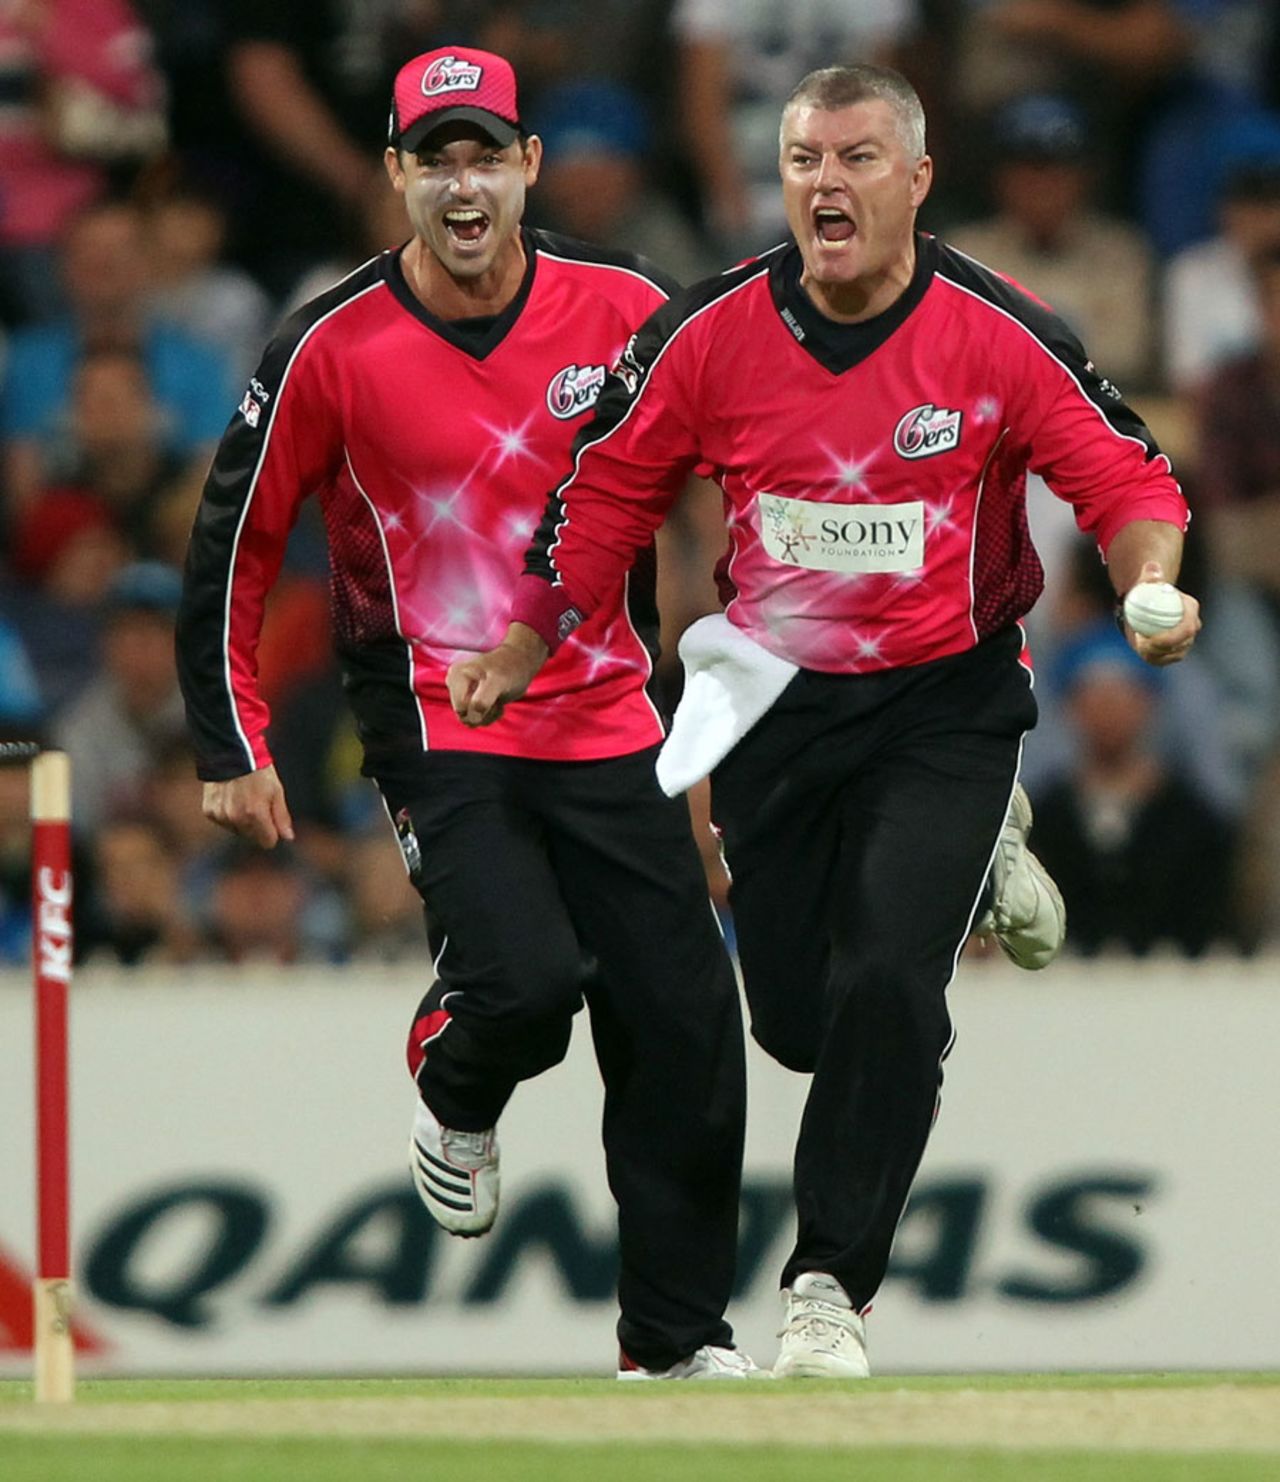 Stuart MacGill celebrates the wicket of Michael Klinger, Adelaide Strikers v Sydney Sixers, BBL, Adelaide, January 10, 2012